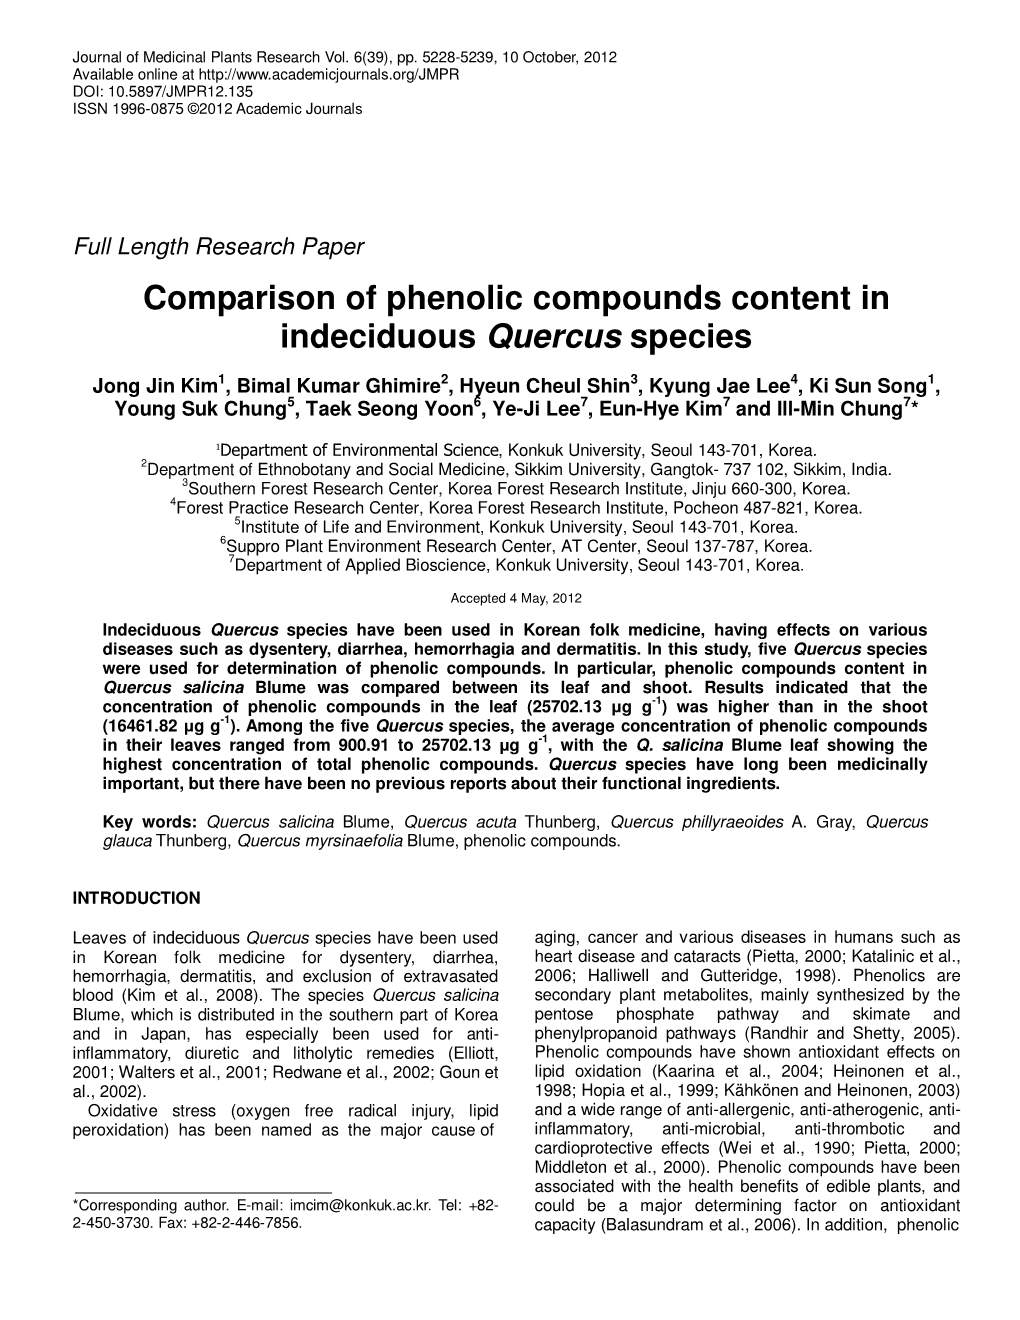 Comparison of Phenolic Compounds Content in Indeciduous Quercus Species